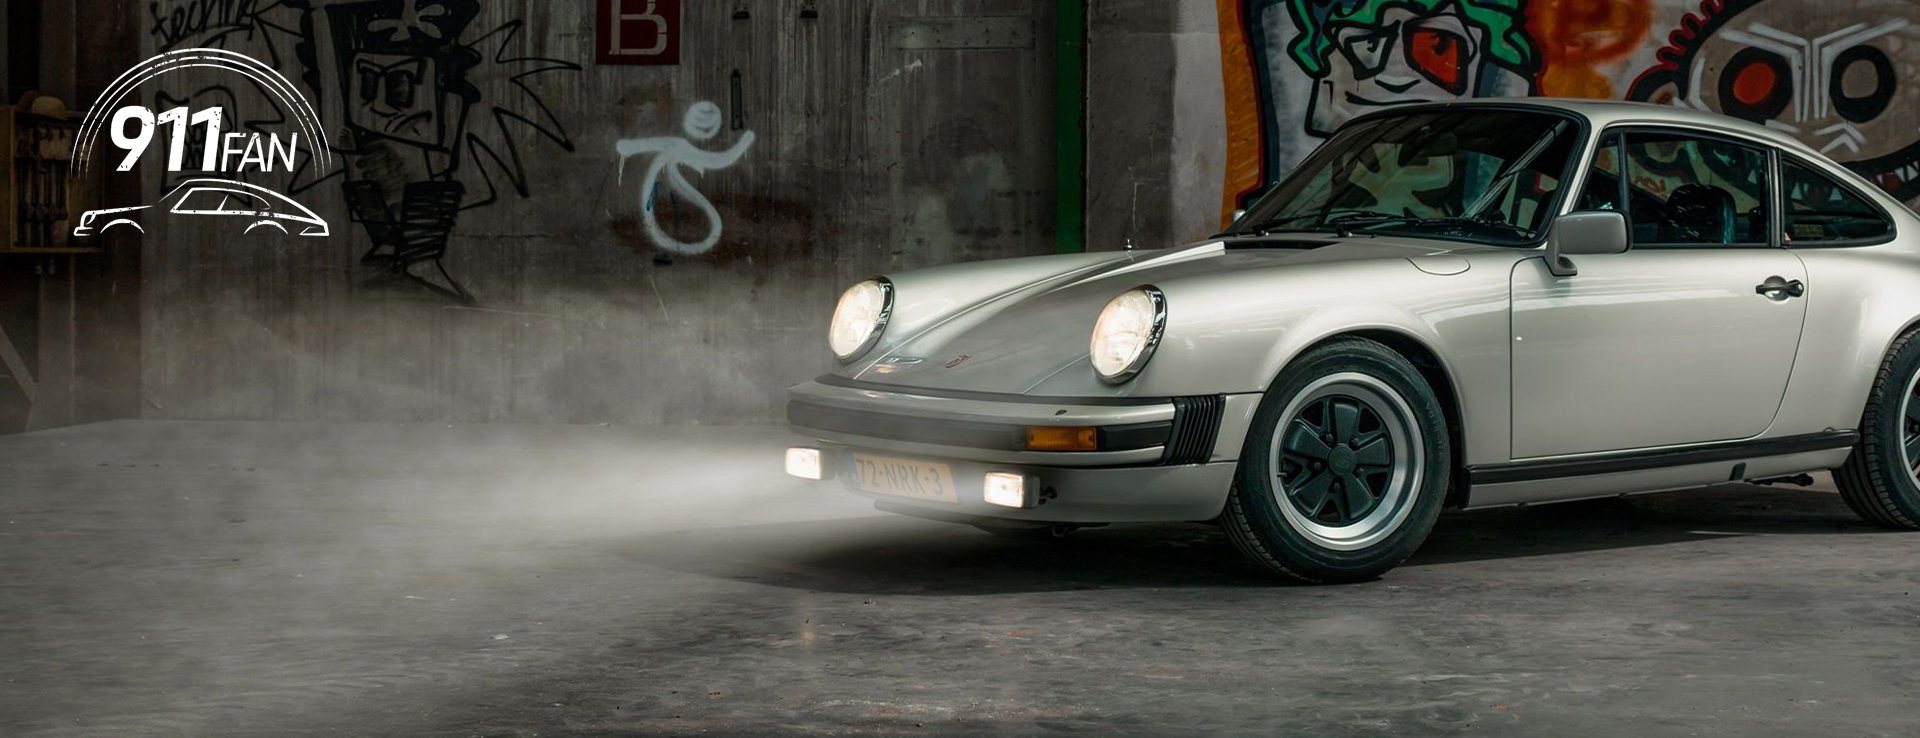 Zinmetallic Porsche 911 SC with headlights on